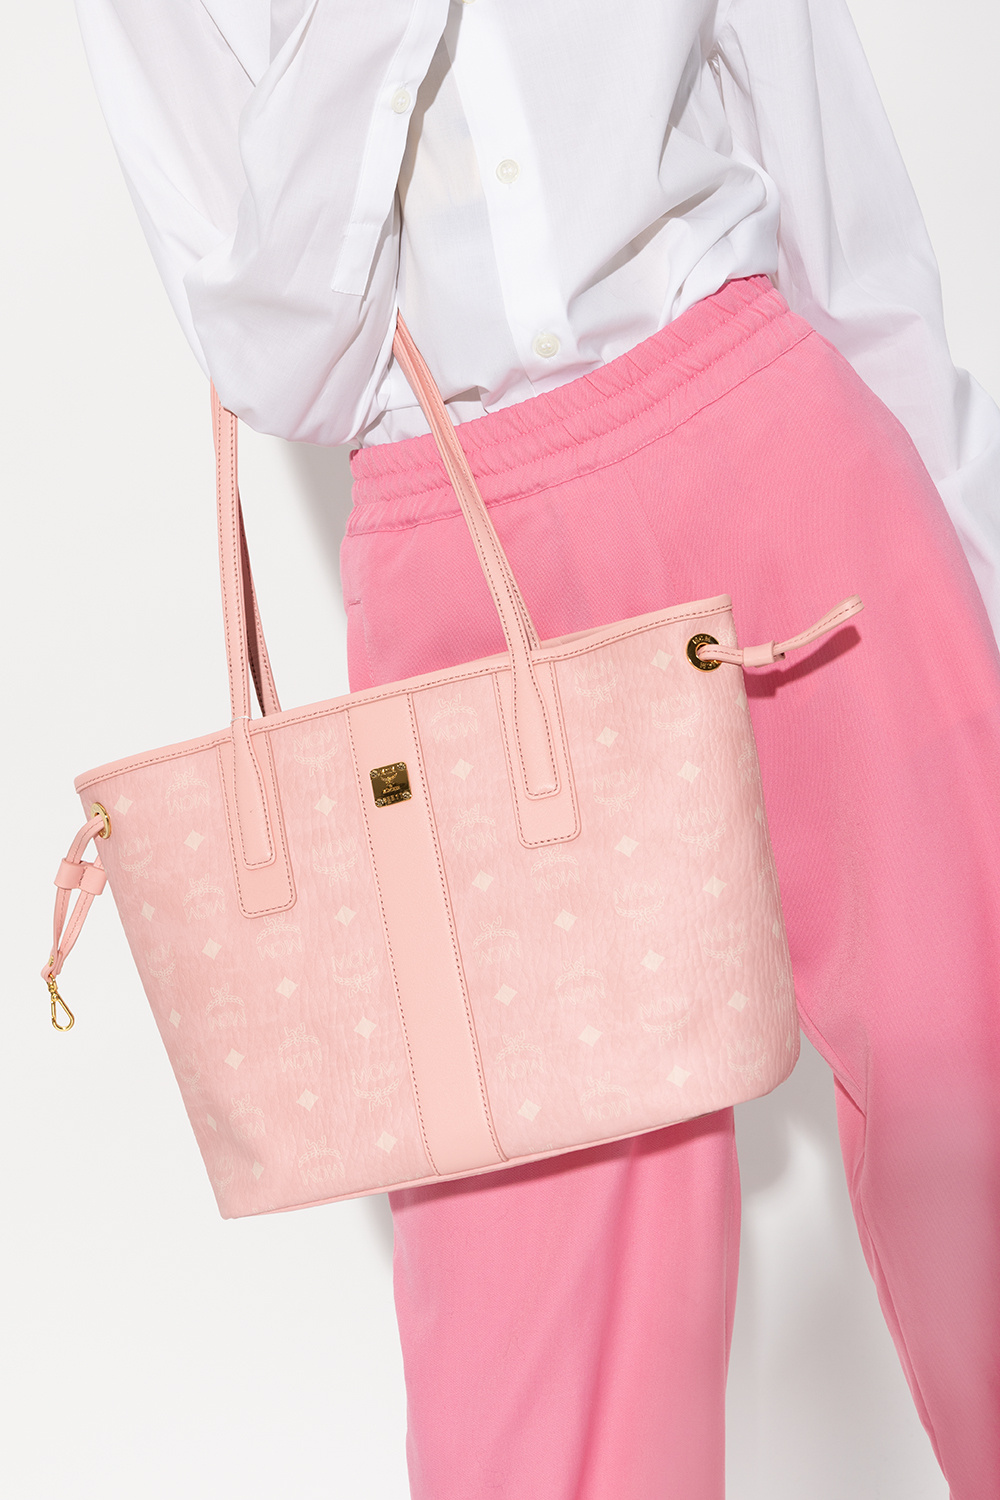 What's in my bag: MCM Liz Tote in Powder Pink 